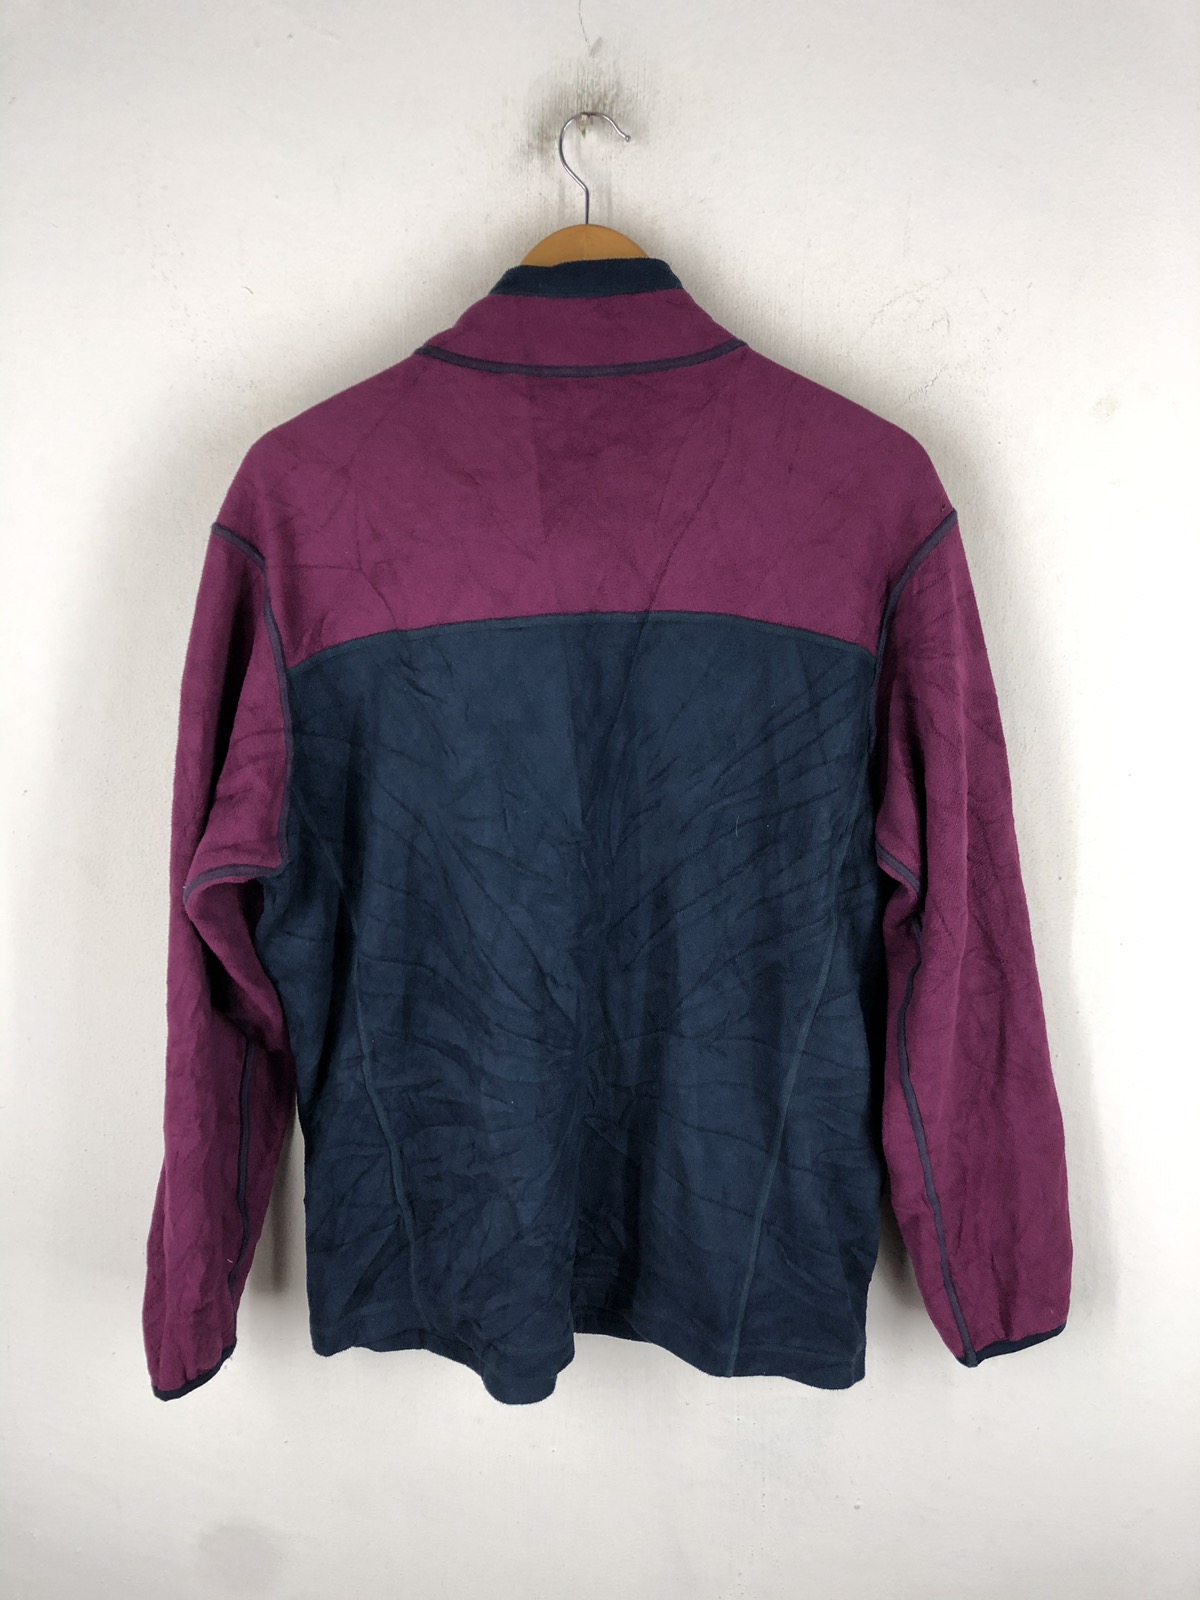 Uniqlo - Two tone color uniqlo fleece jacket - 4